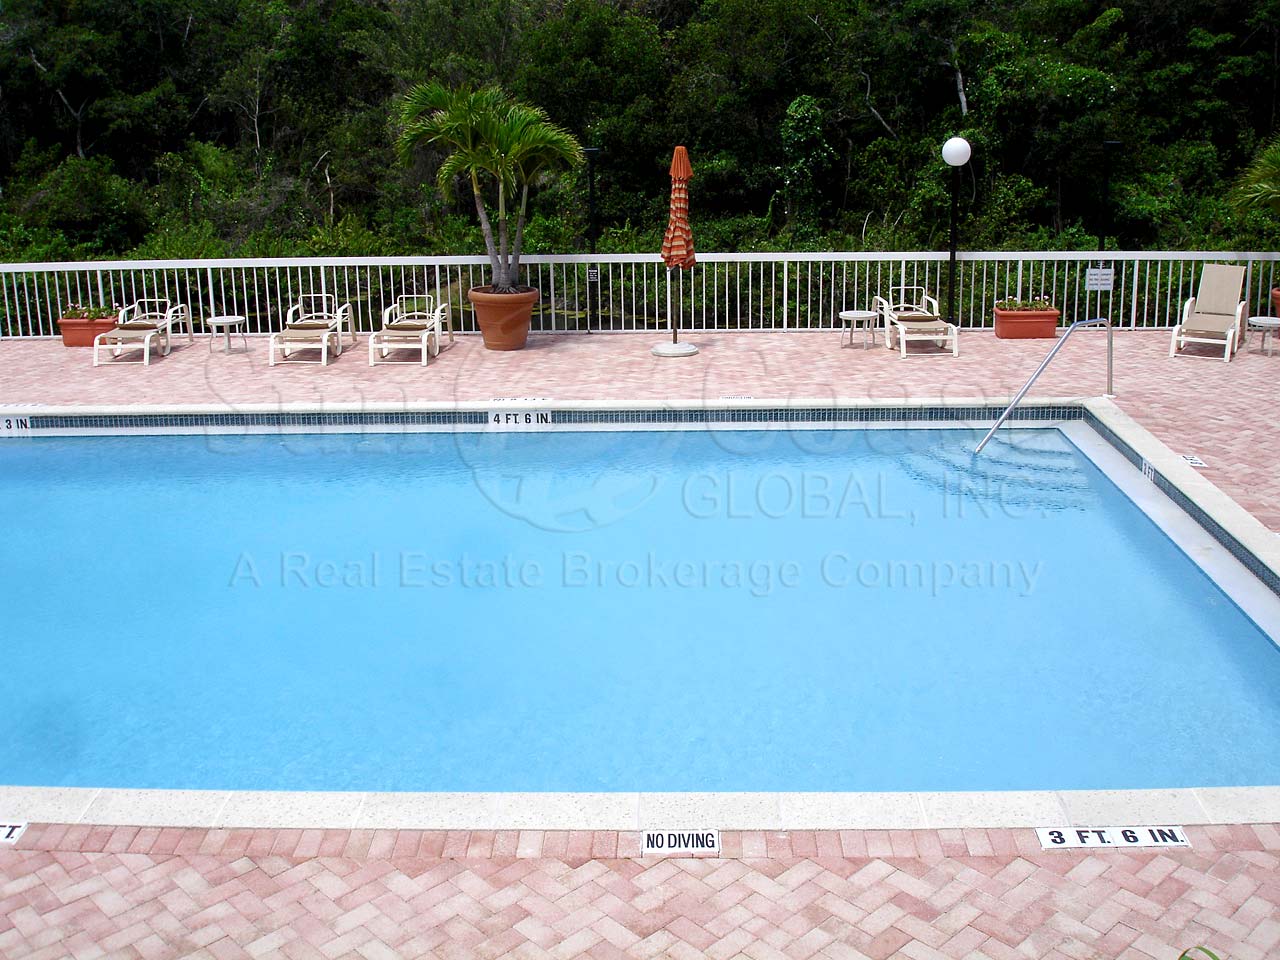 St Maarten Community Pool